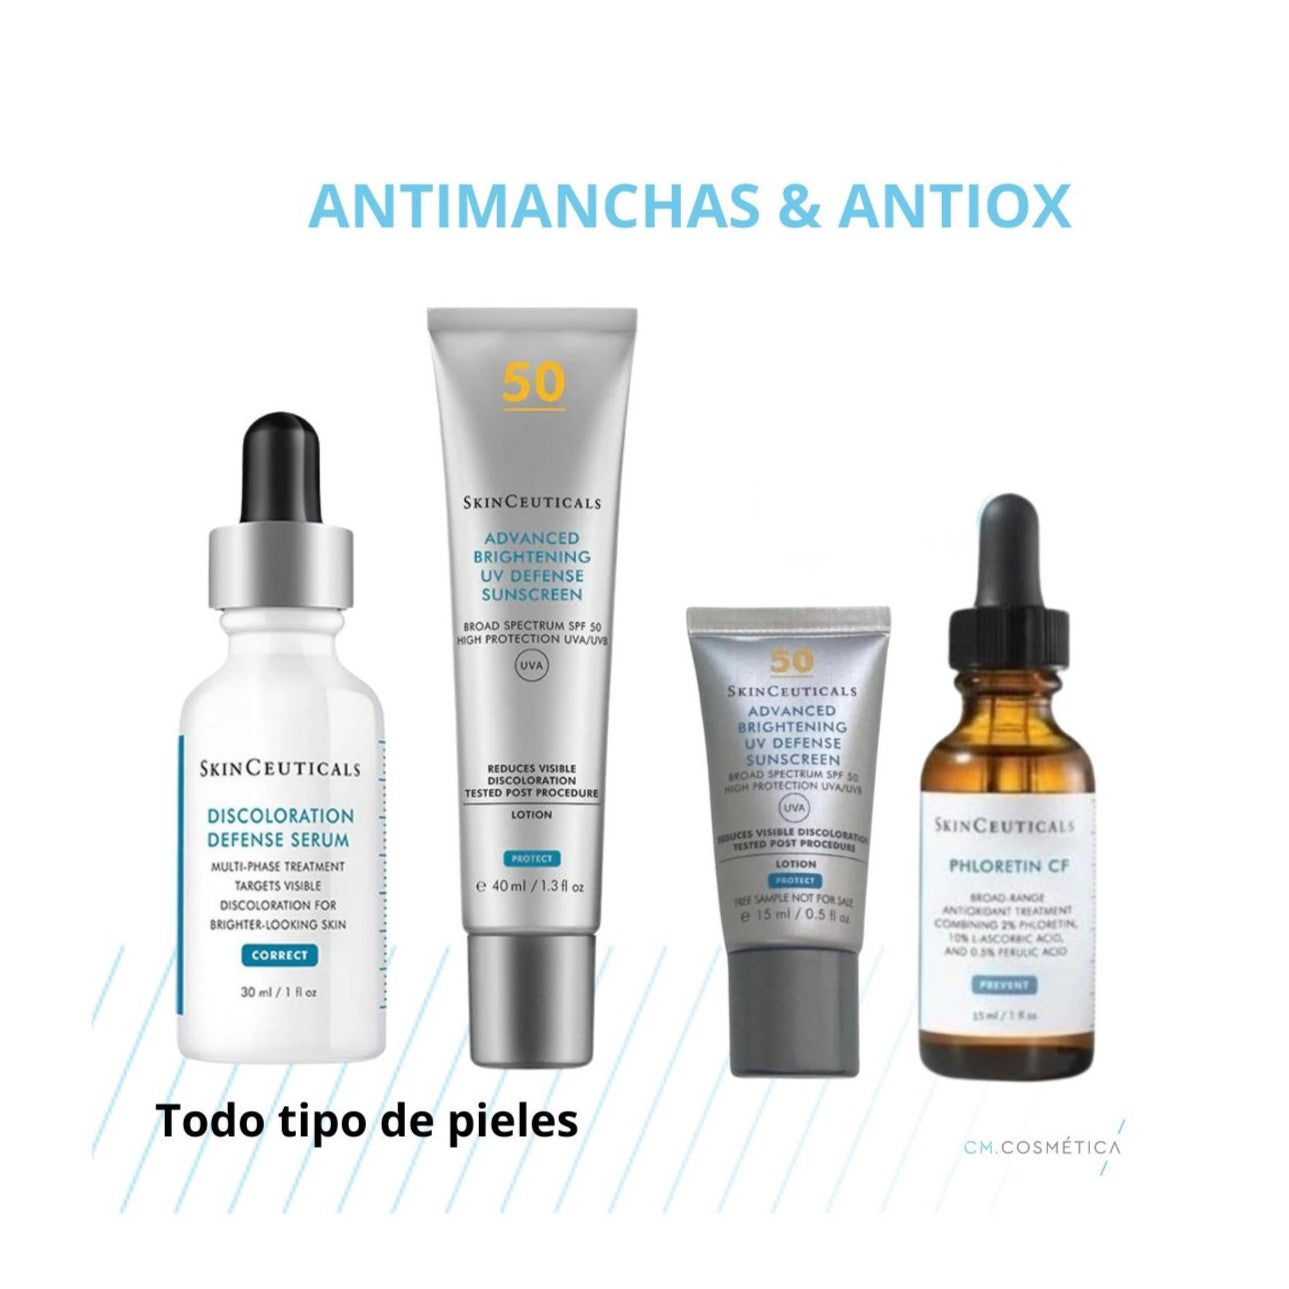 Skinceuticals Pack Antimanchas & Antioxidantes